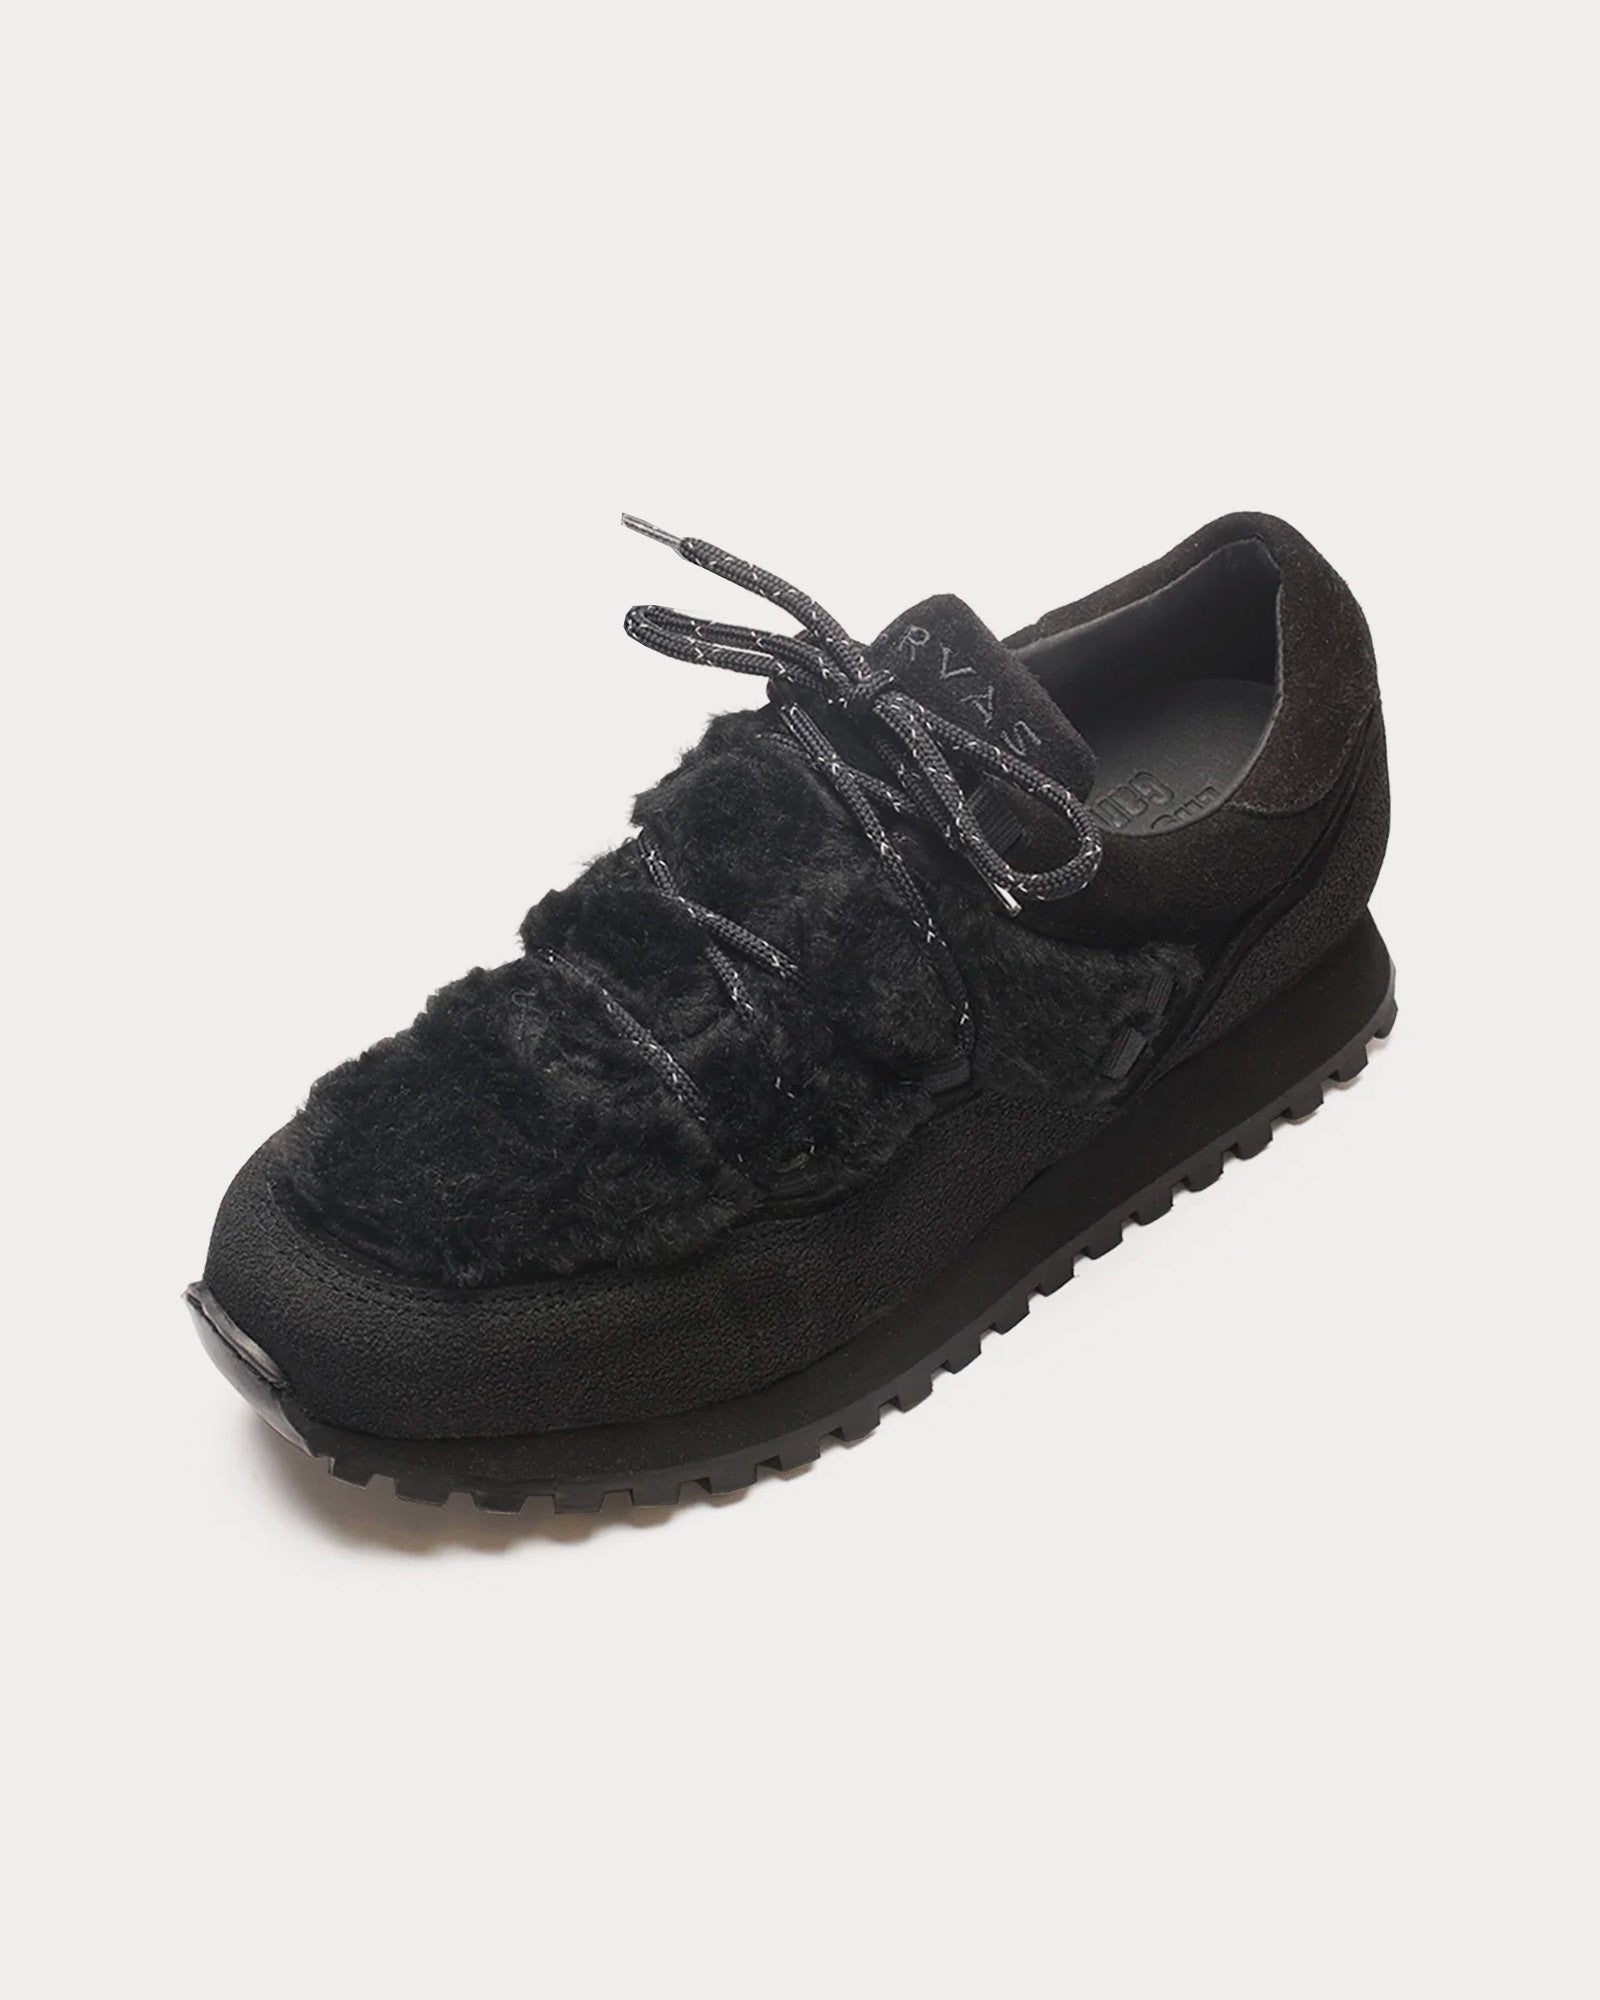 Tarvas x Engineered Garments - Forest Bather Black Low Top Sneakers